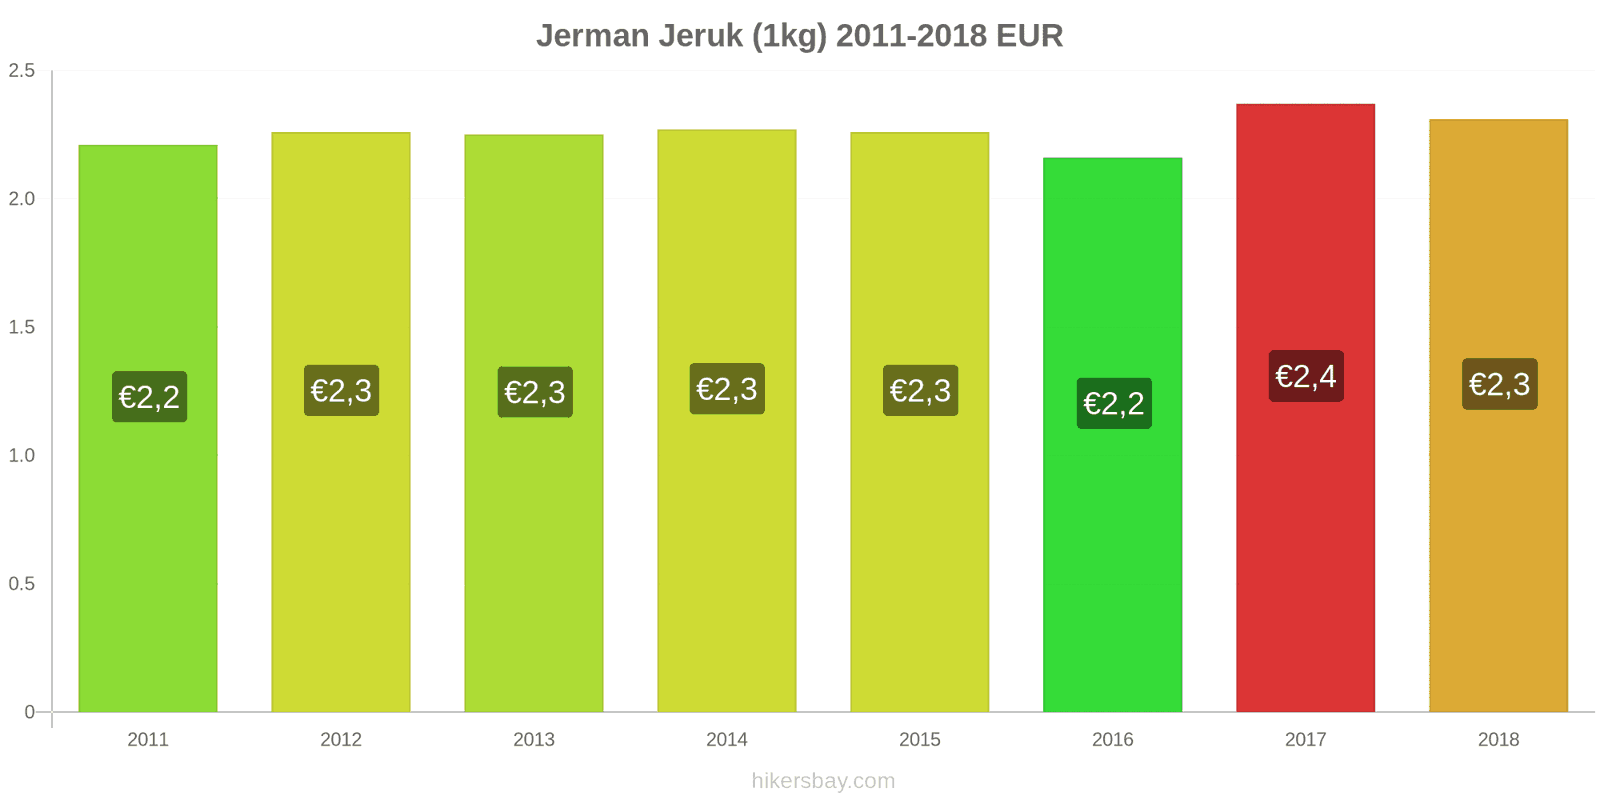 Jerman perubahan harga Jeruk (1kg) hikersbay.com